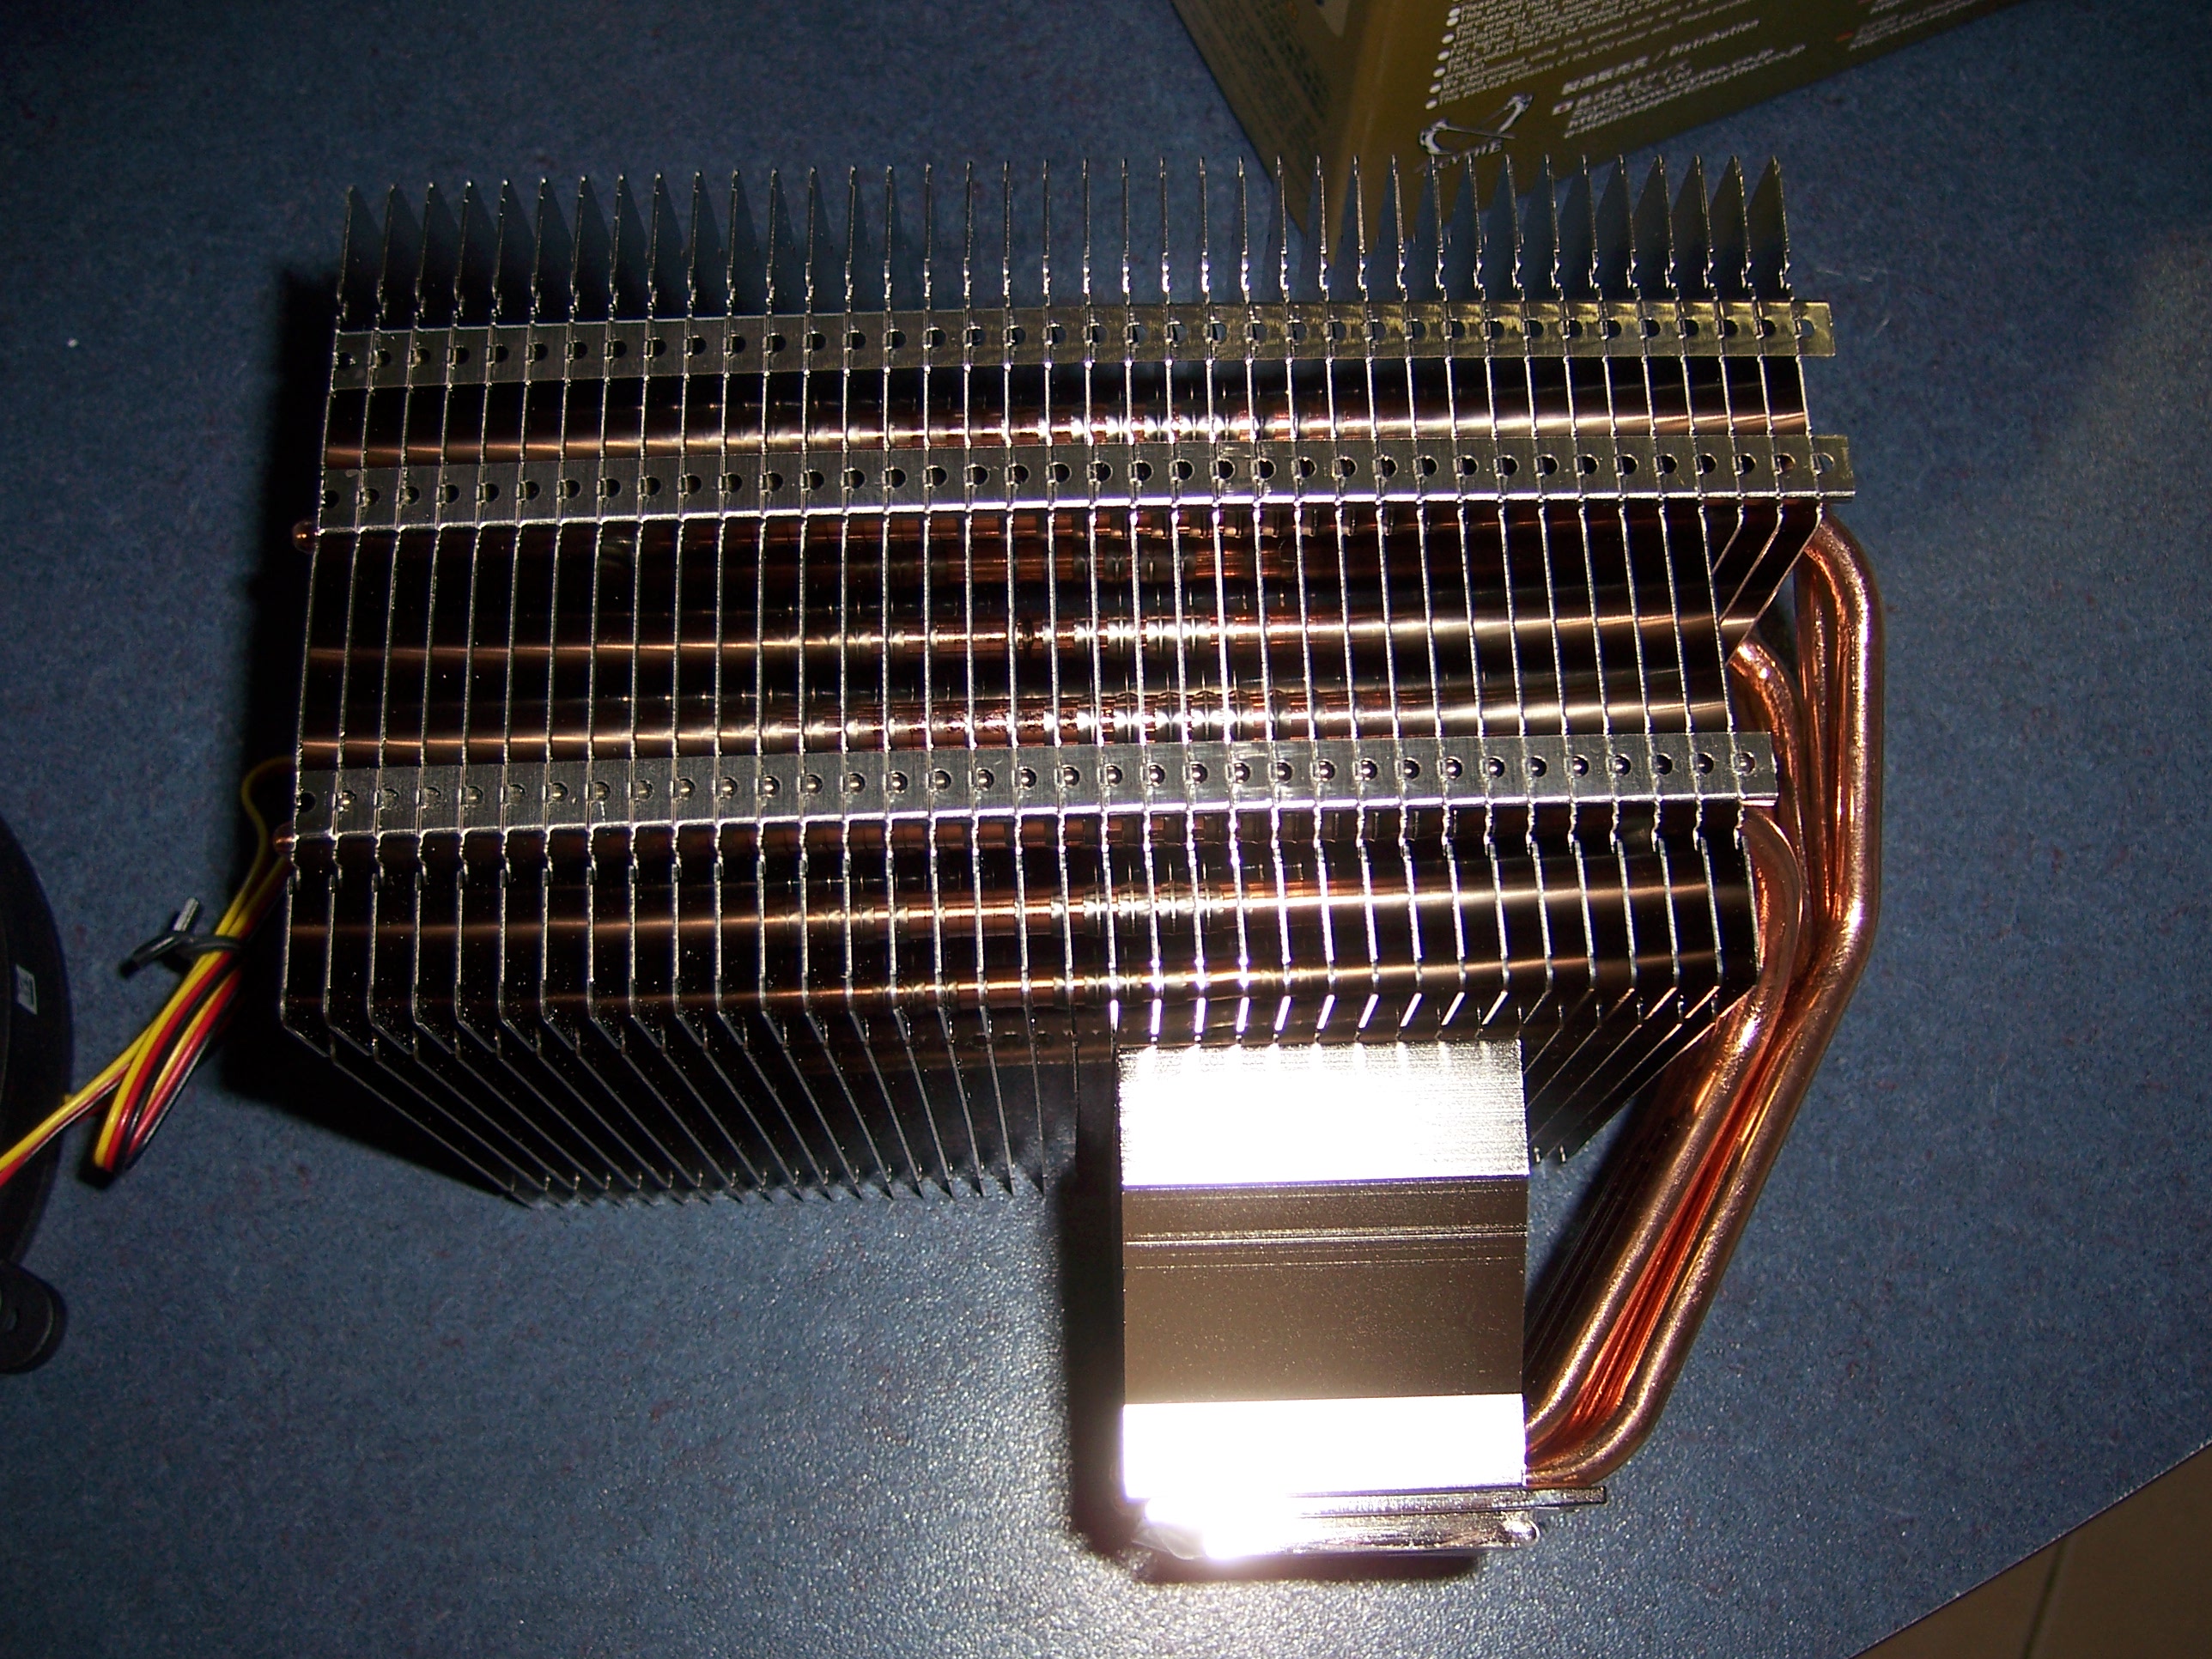 Chipset heatsinks